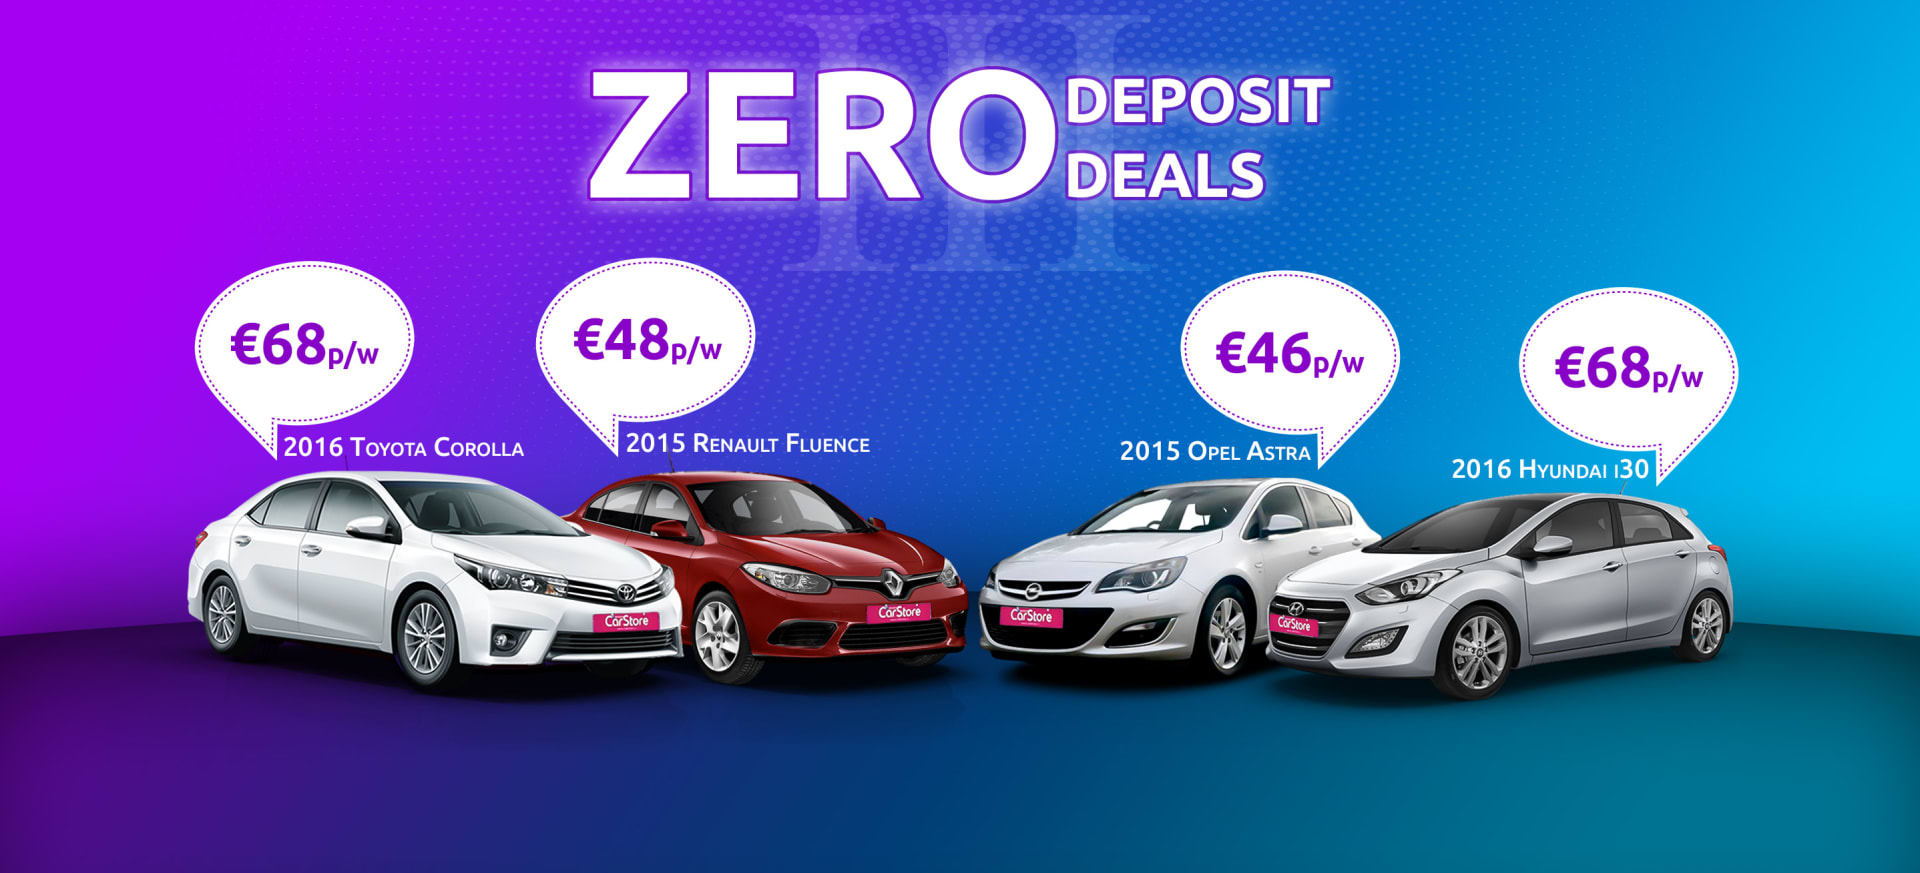 Zero Deposit Deals Three